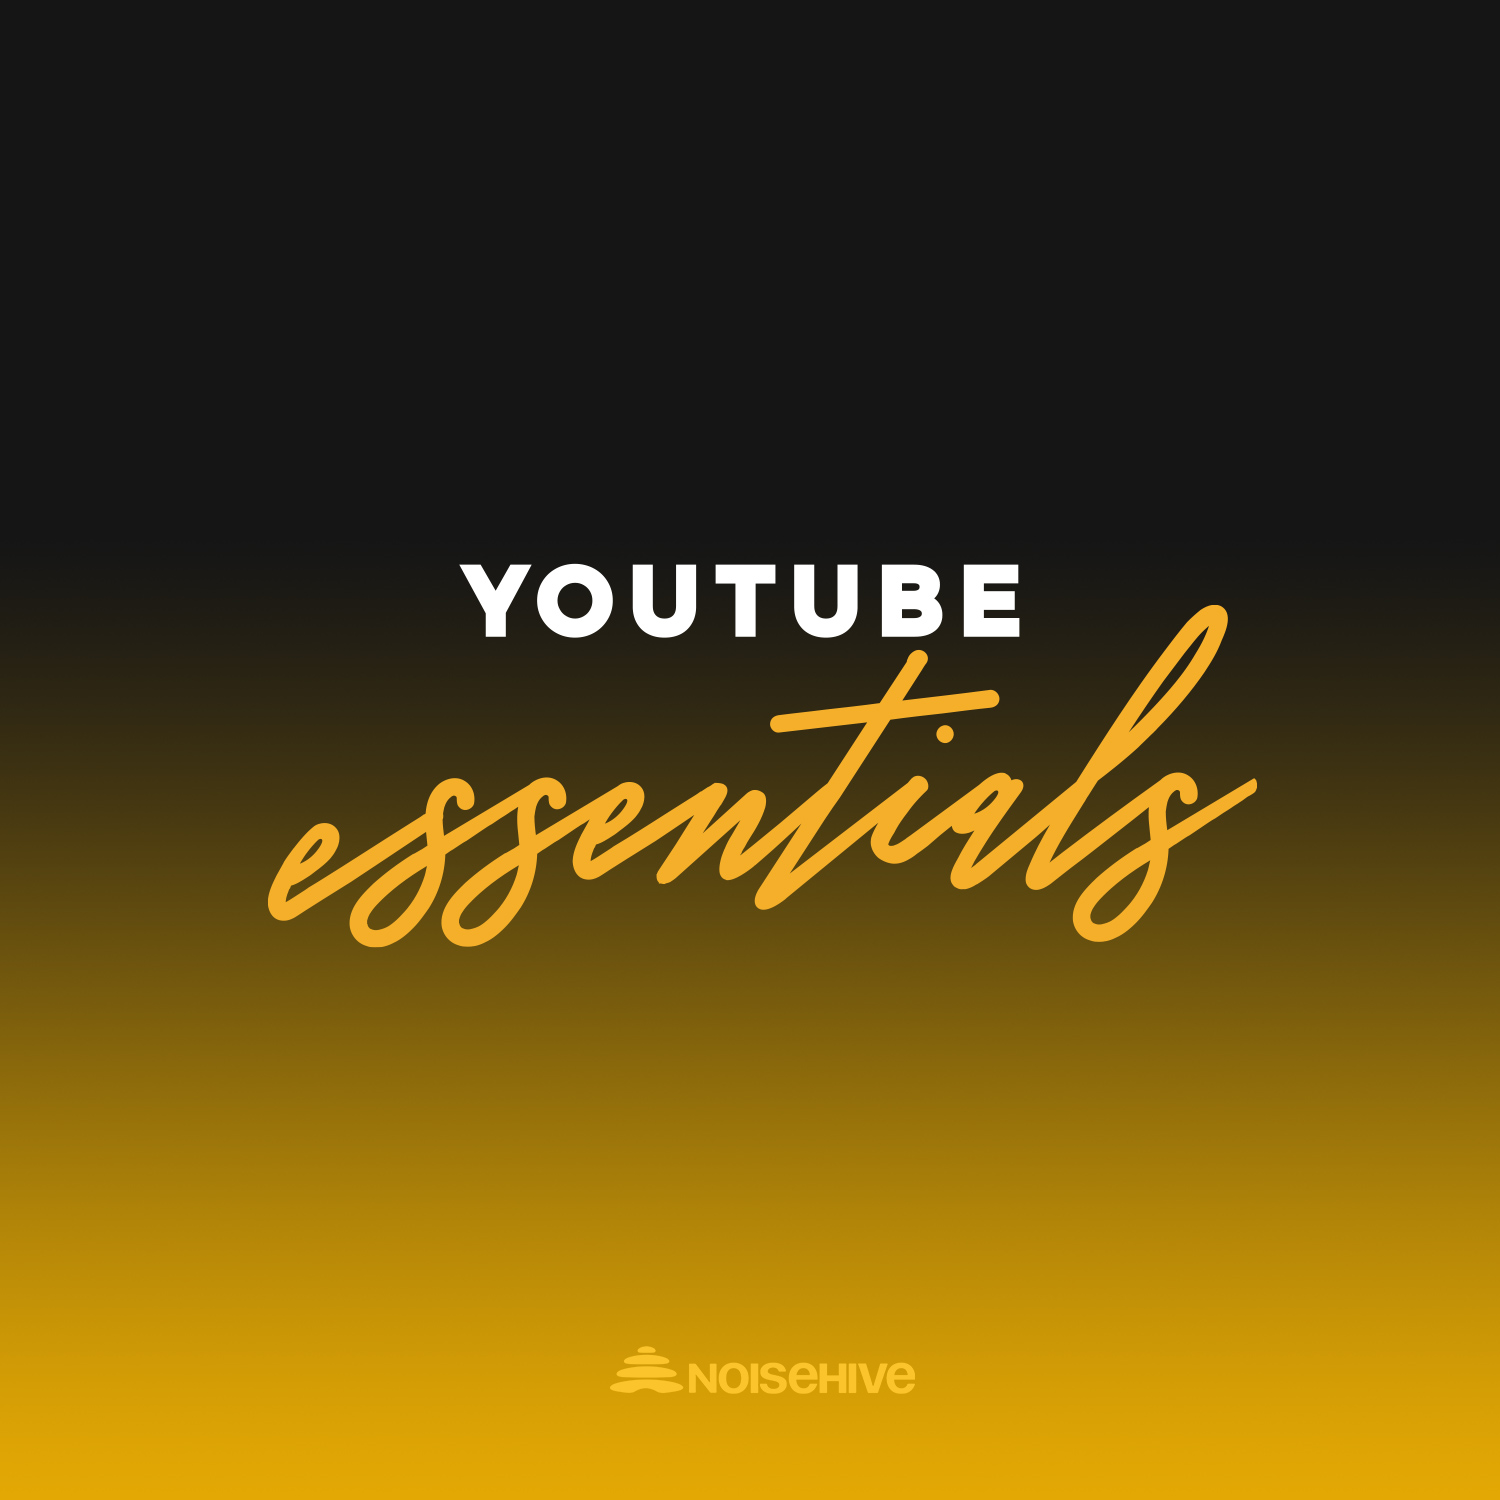 YouTube Essentials